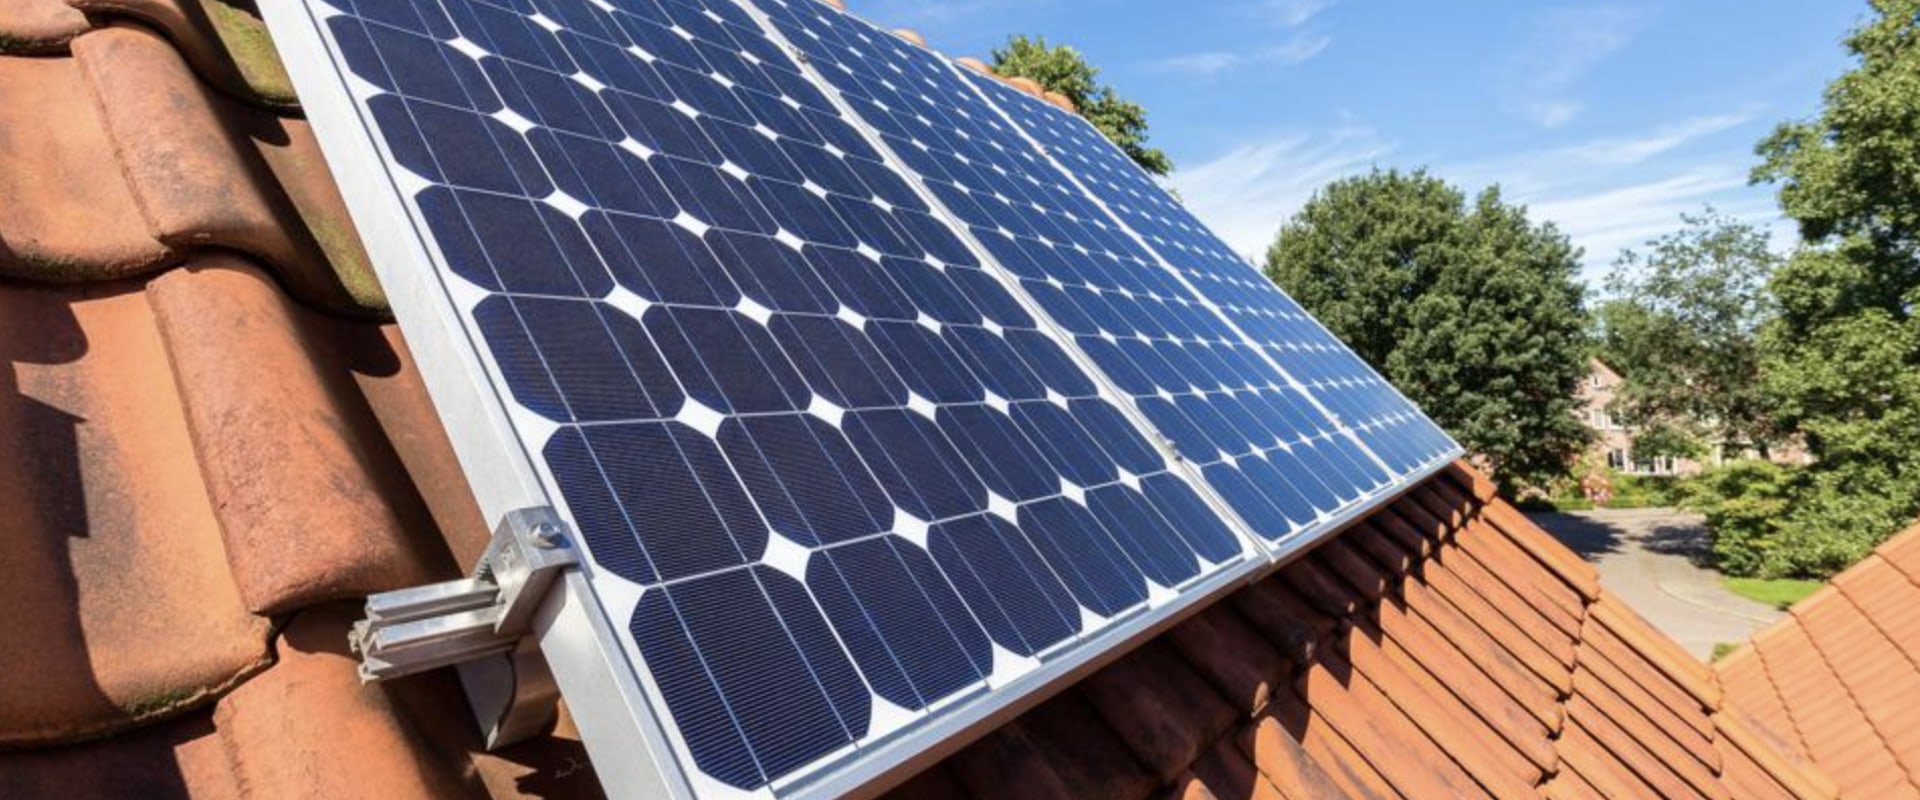 Best Hybrid Solar Generator Reviews